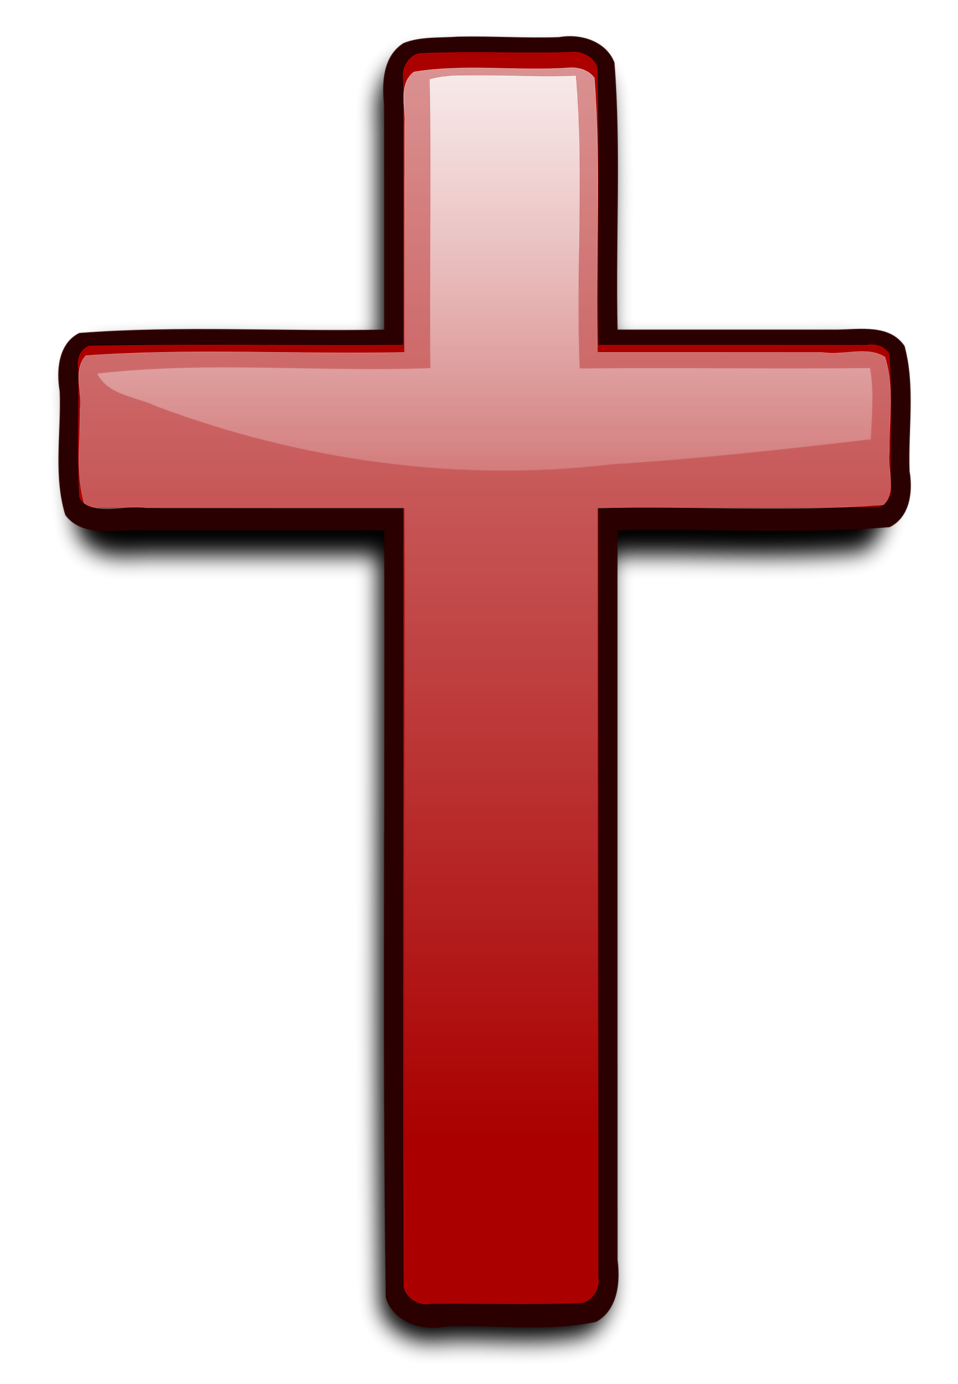 Christian Red Cross Symbol   Clipart Best